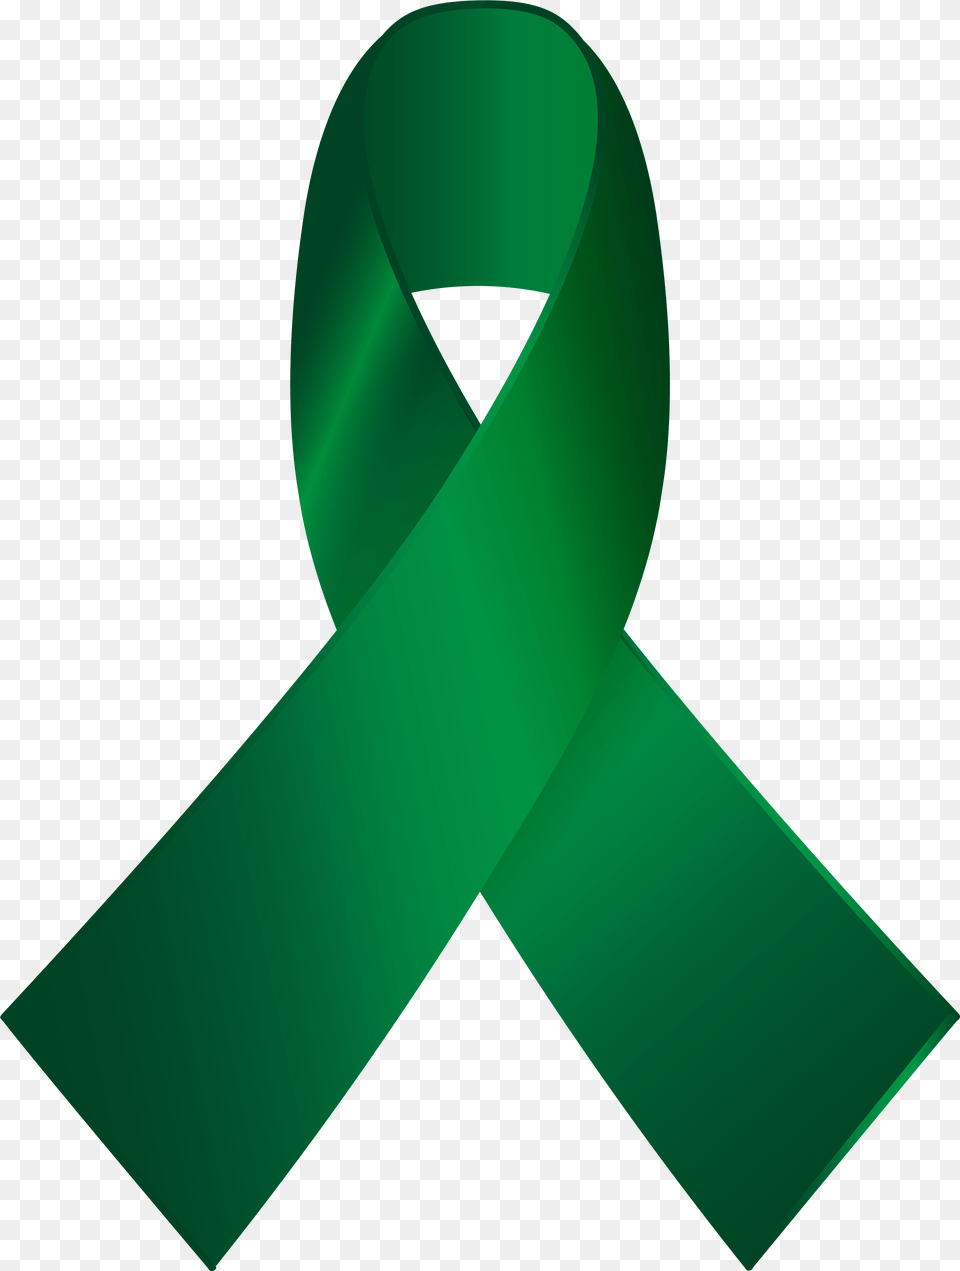 Green Awareness Ribbon Clip Art Green Awareness Ribbon, Accessories, Formal Wear, Tie Free Transparent Png